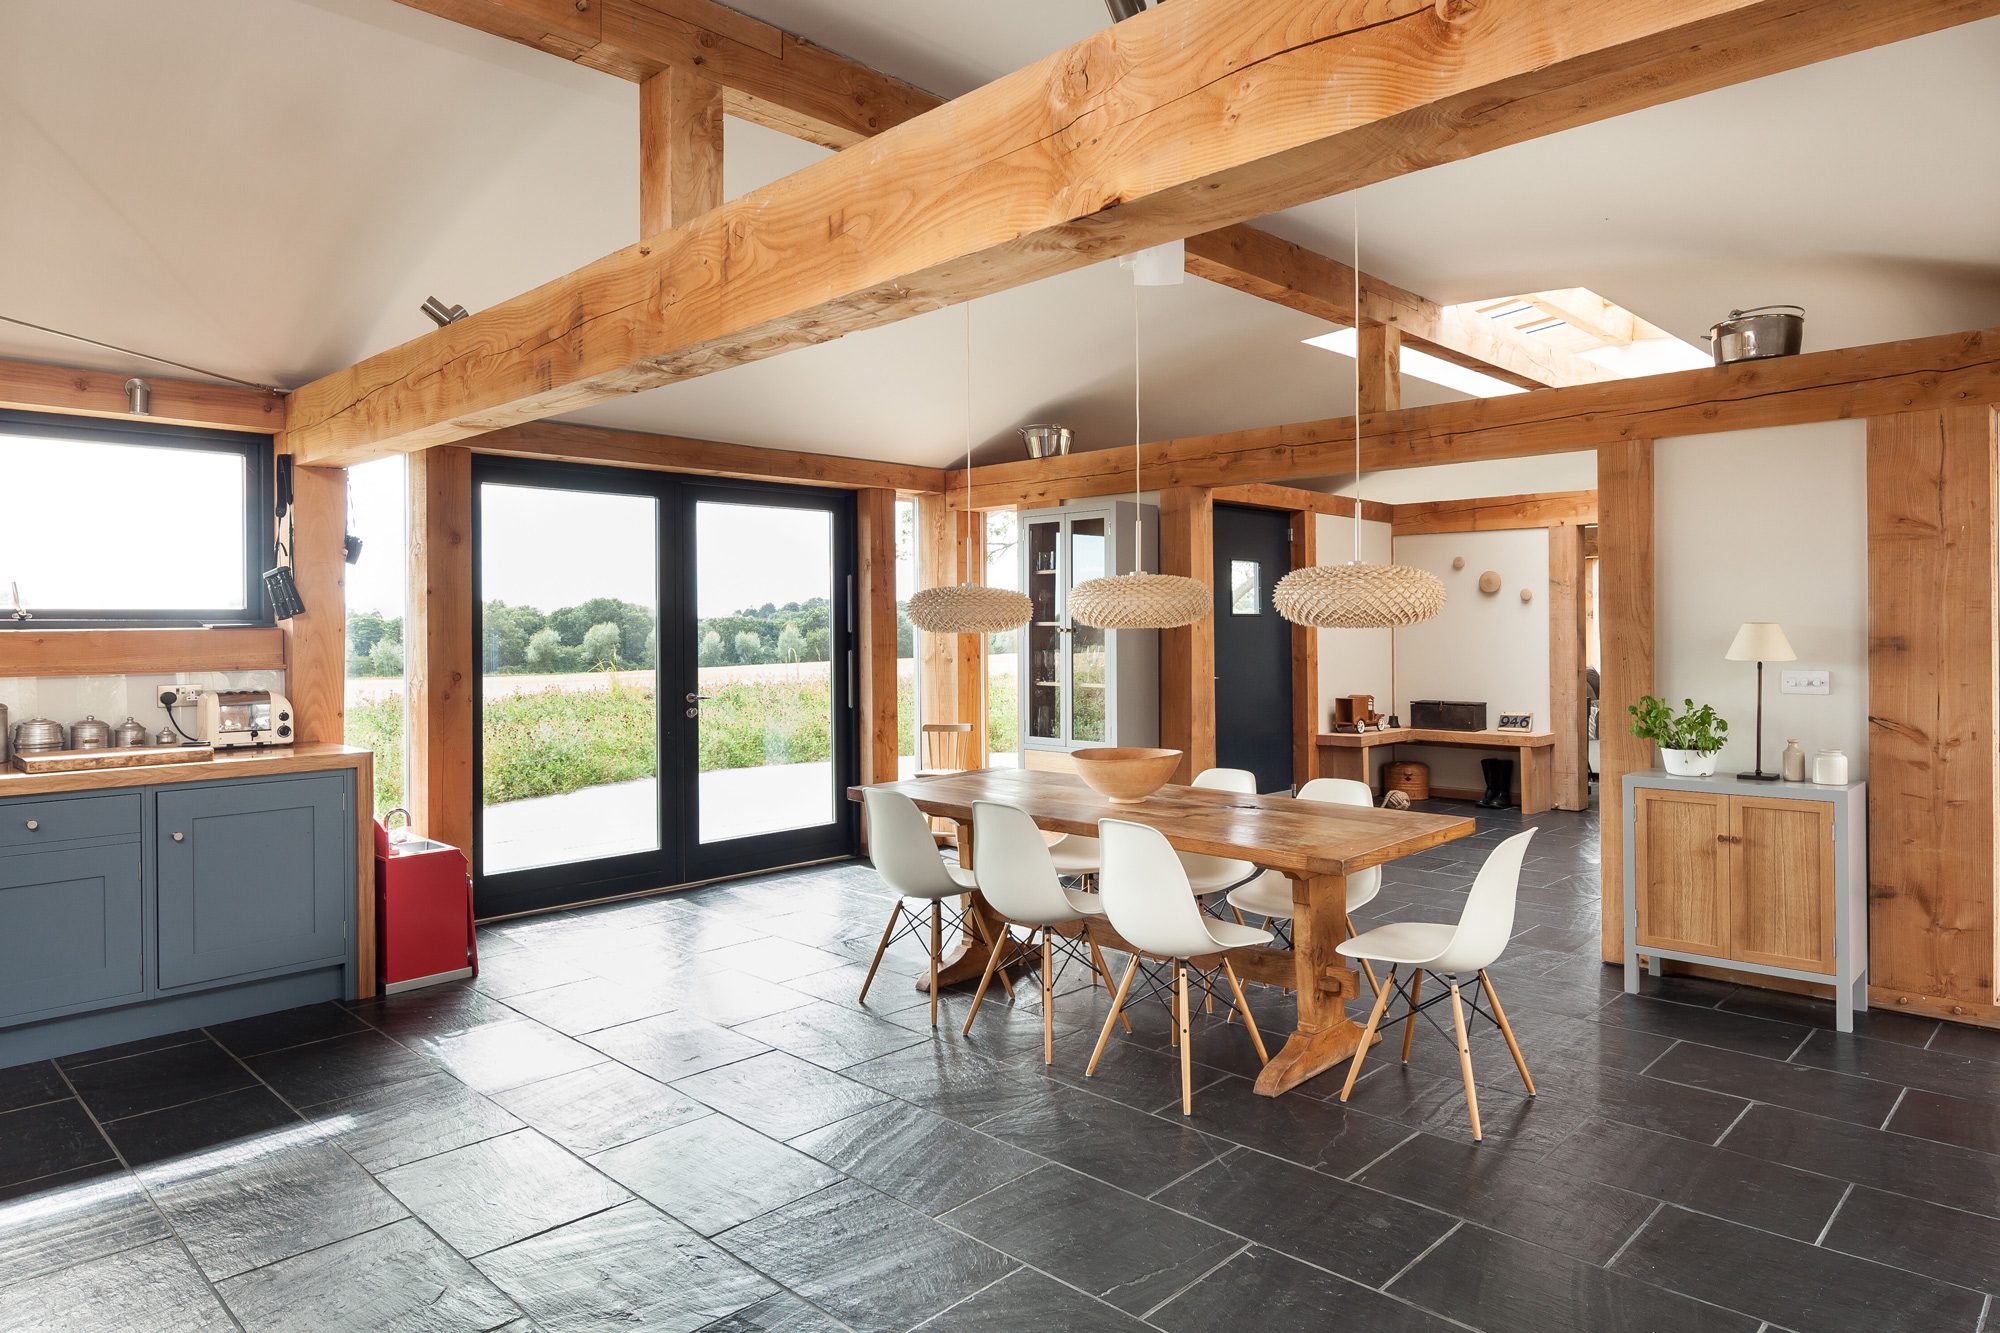 allies farm kitchen with exposed oak frame beams